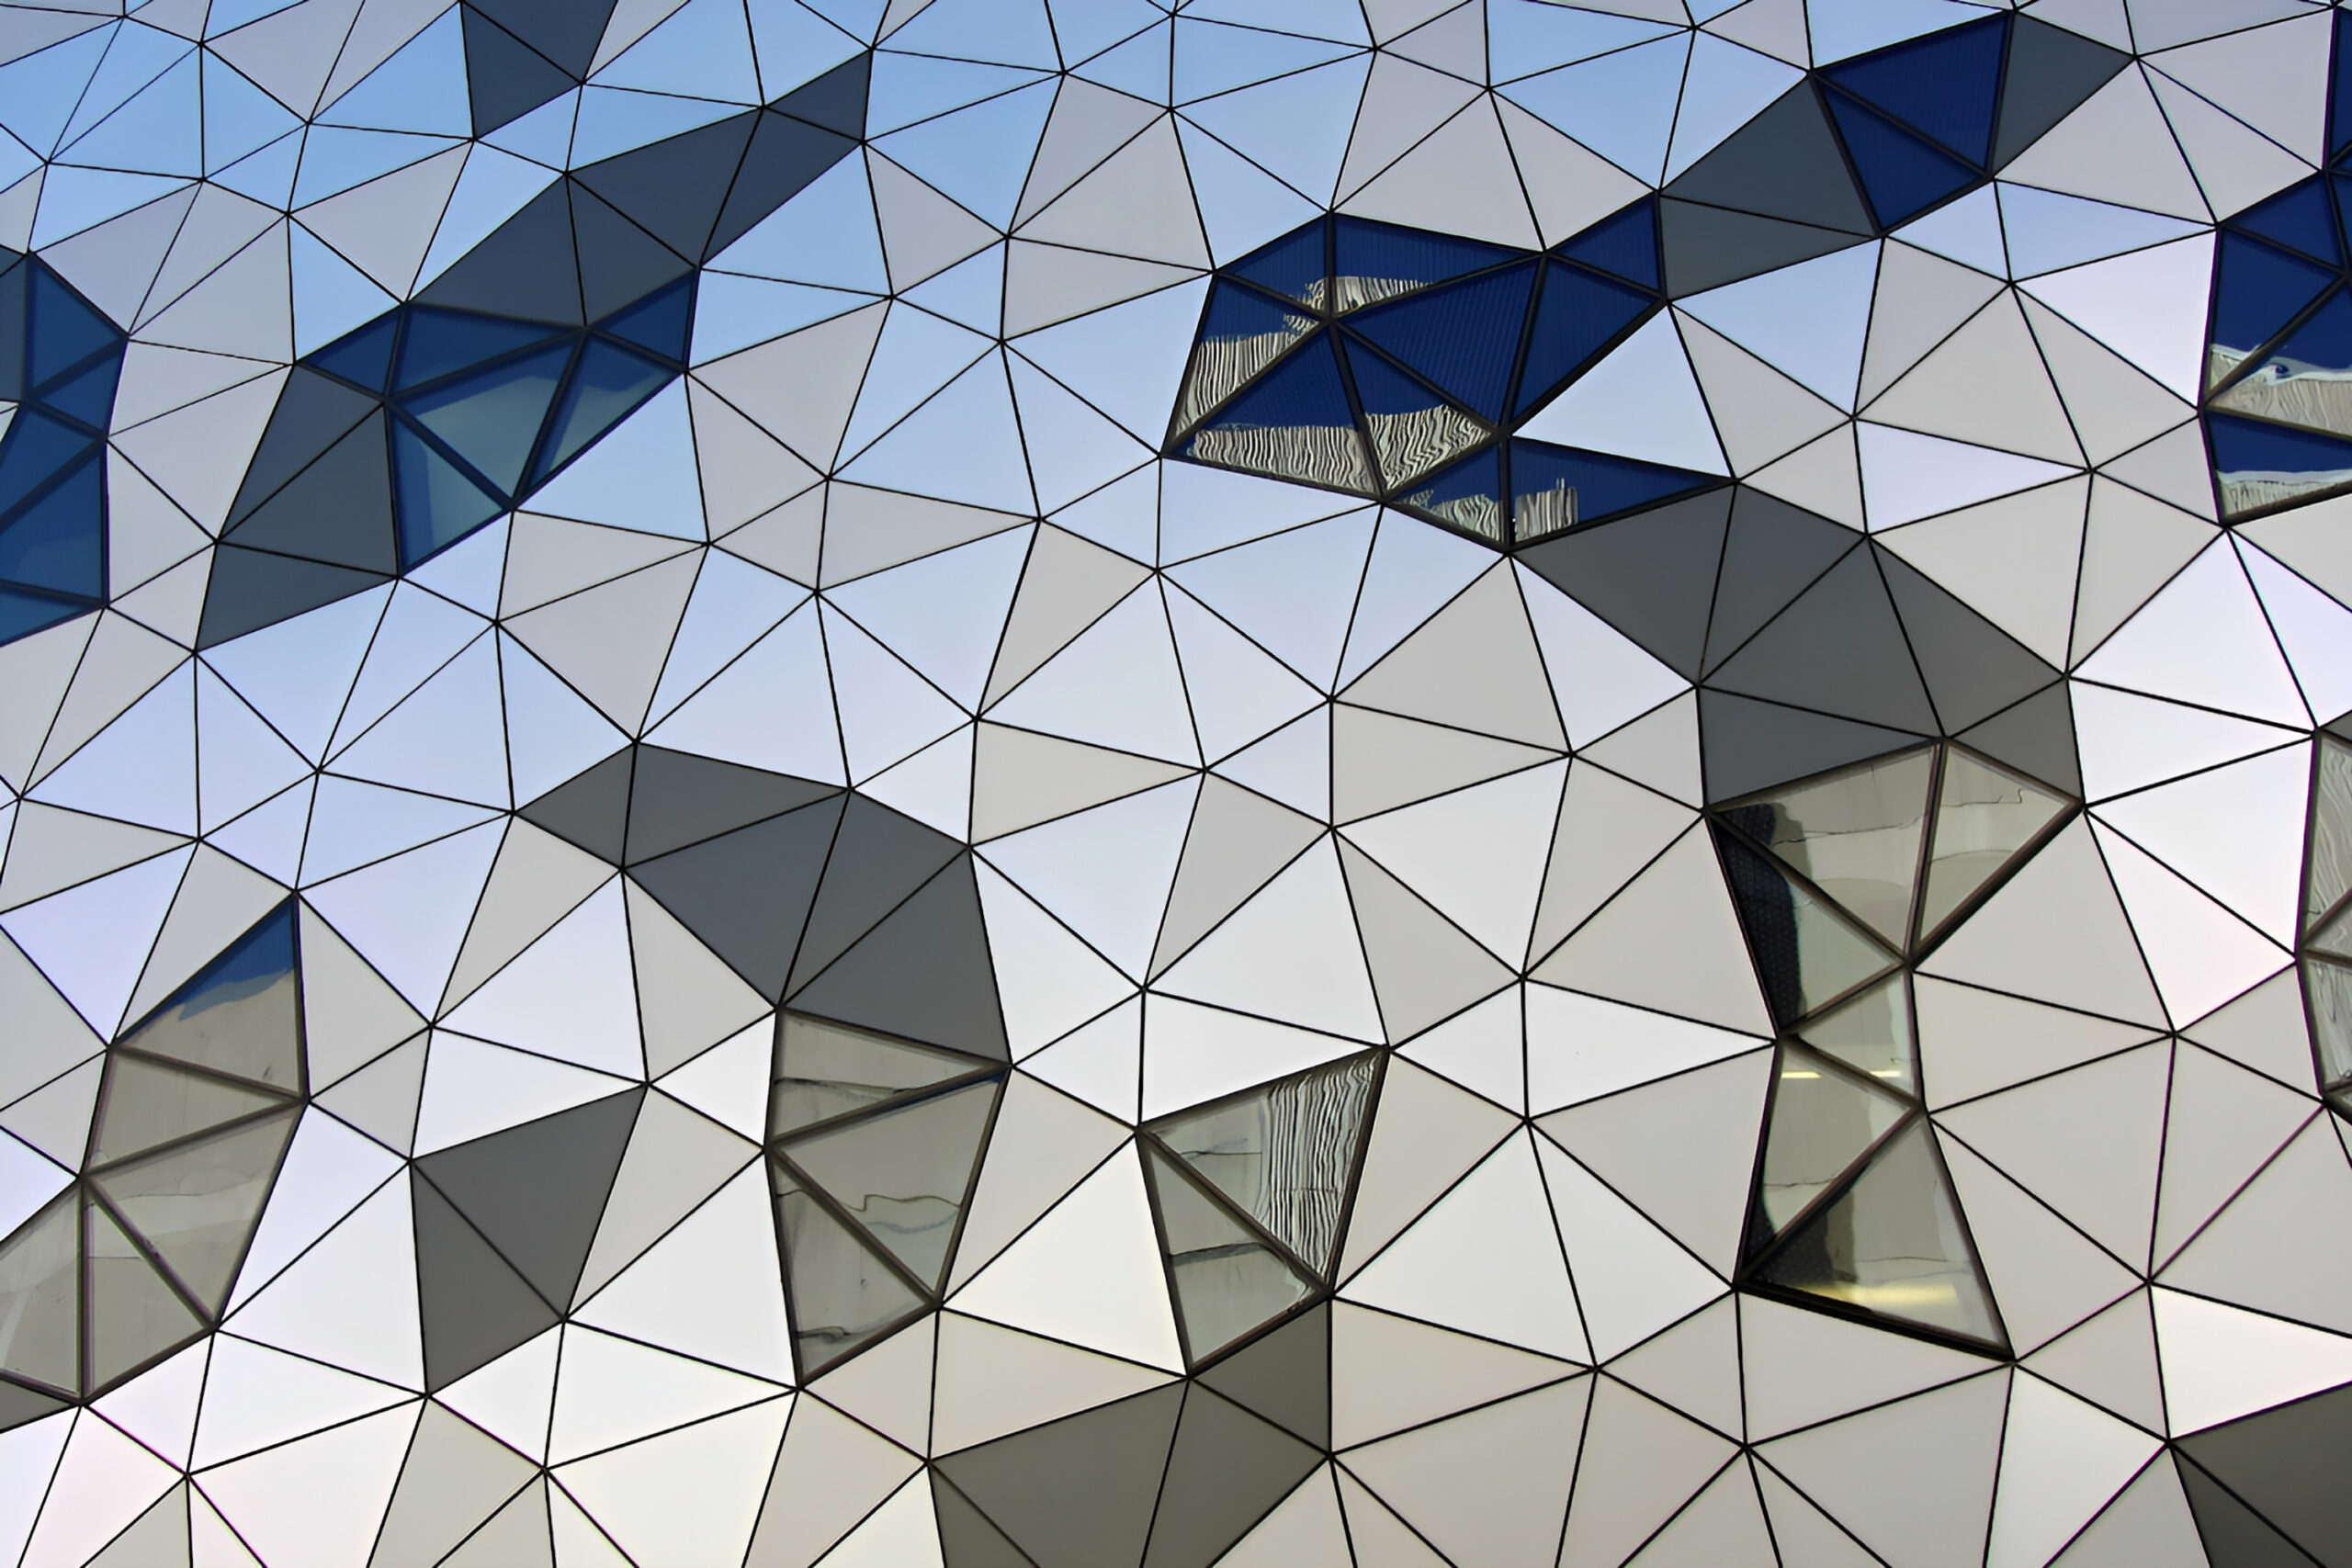 Lassonde Bergeron Centre, architectural exterior, close-up view of geometric pattern, asymmetrical windows